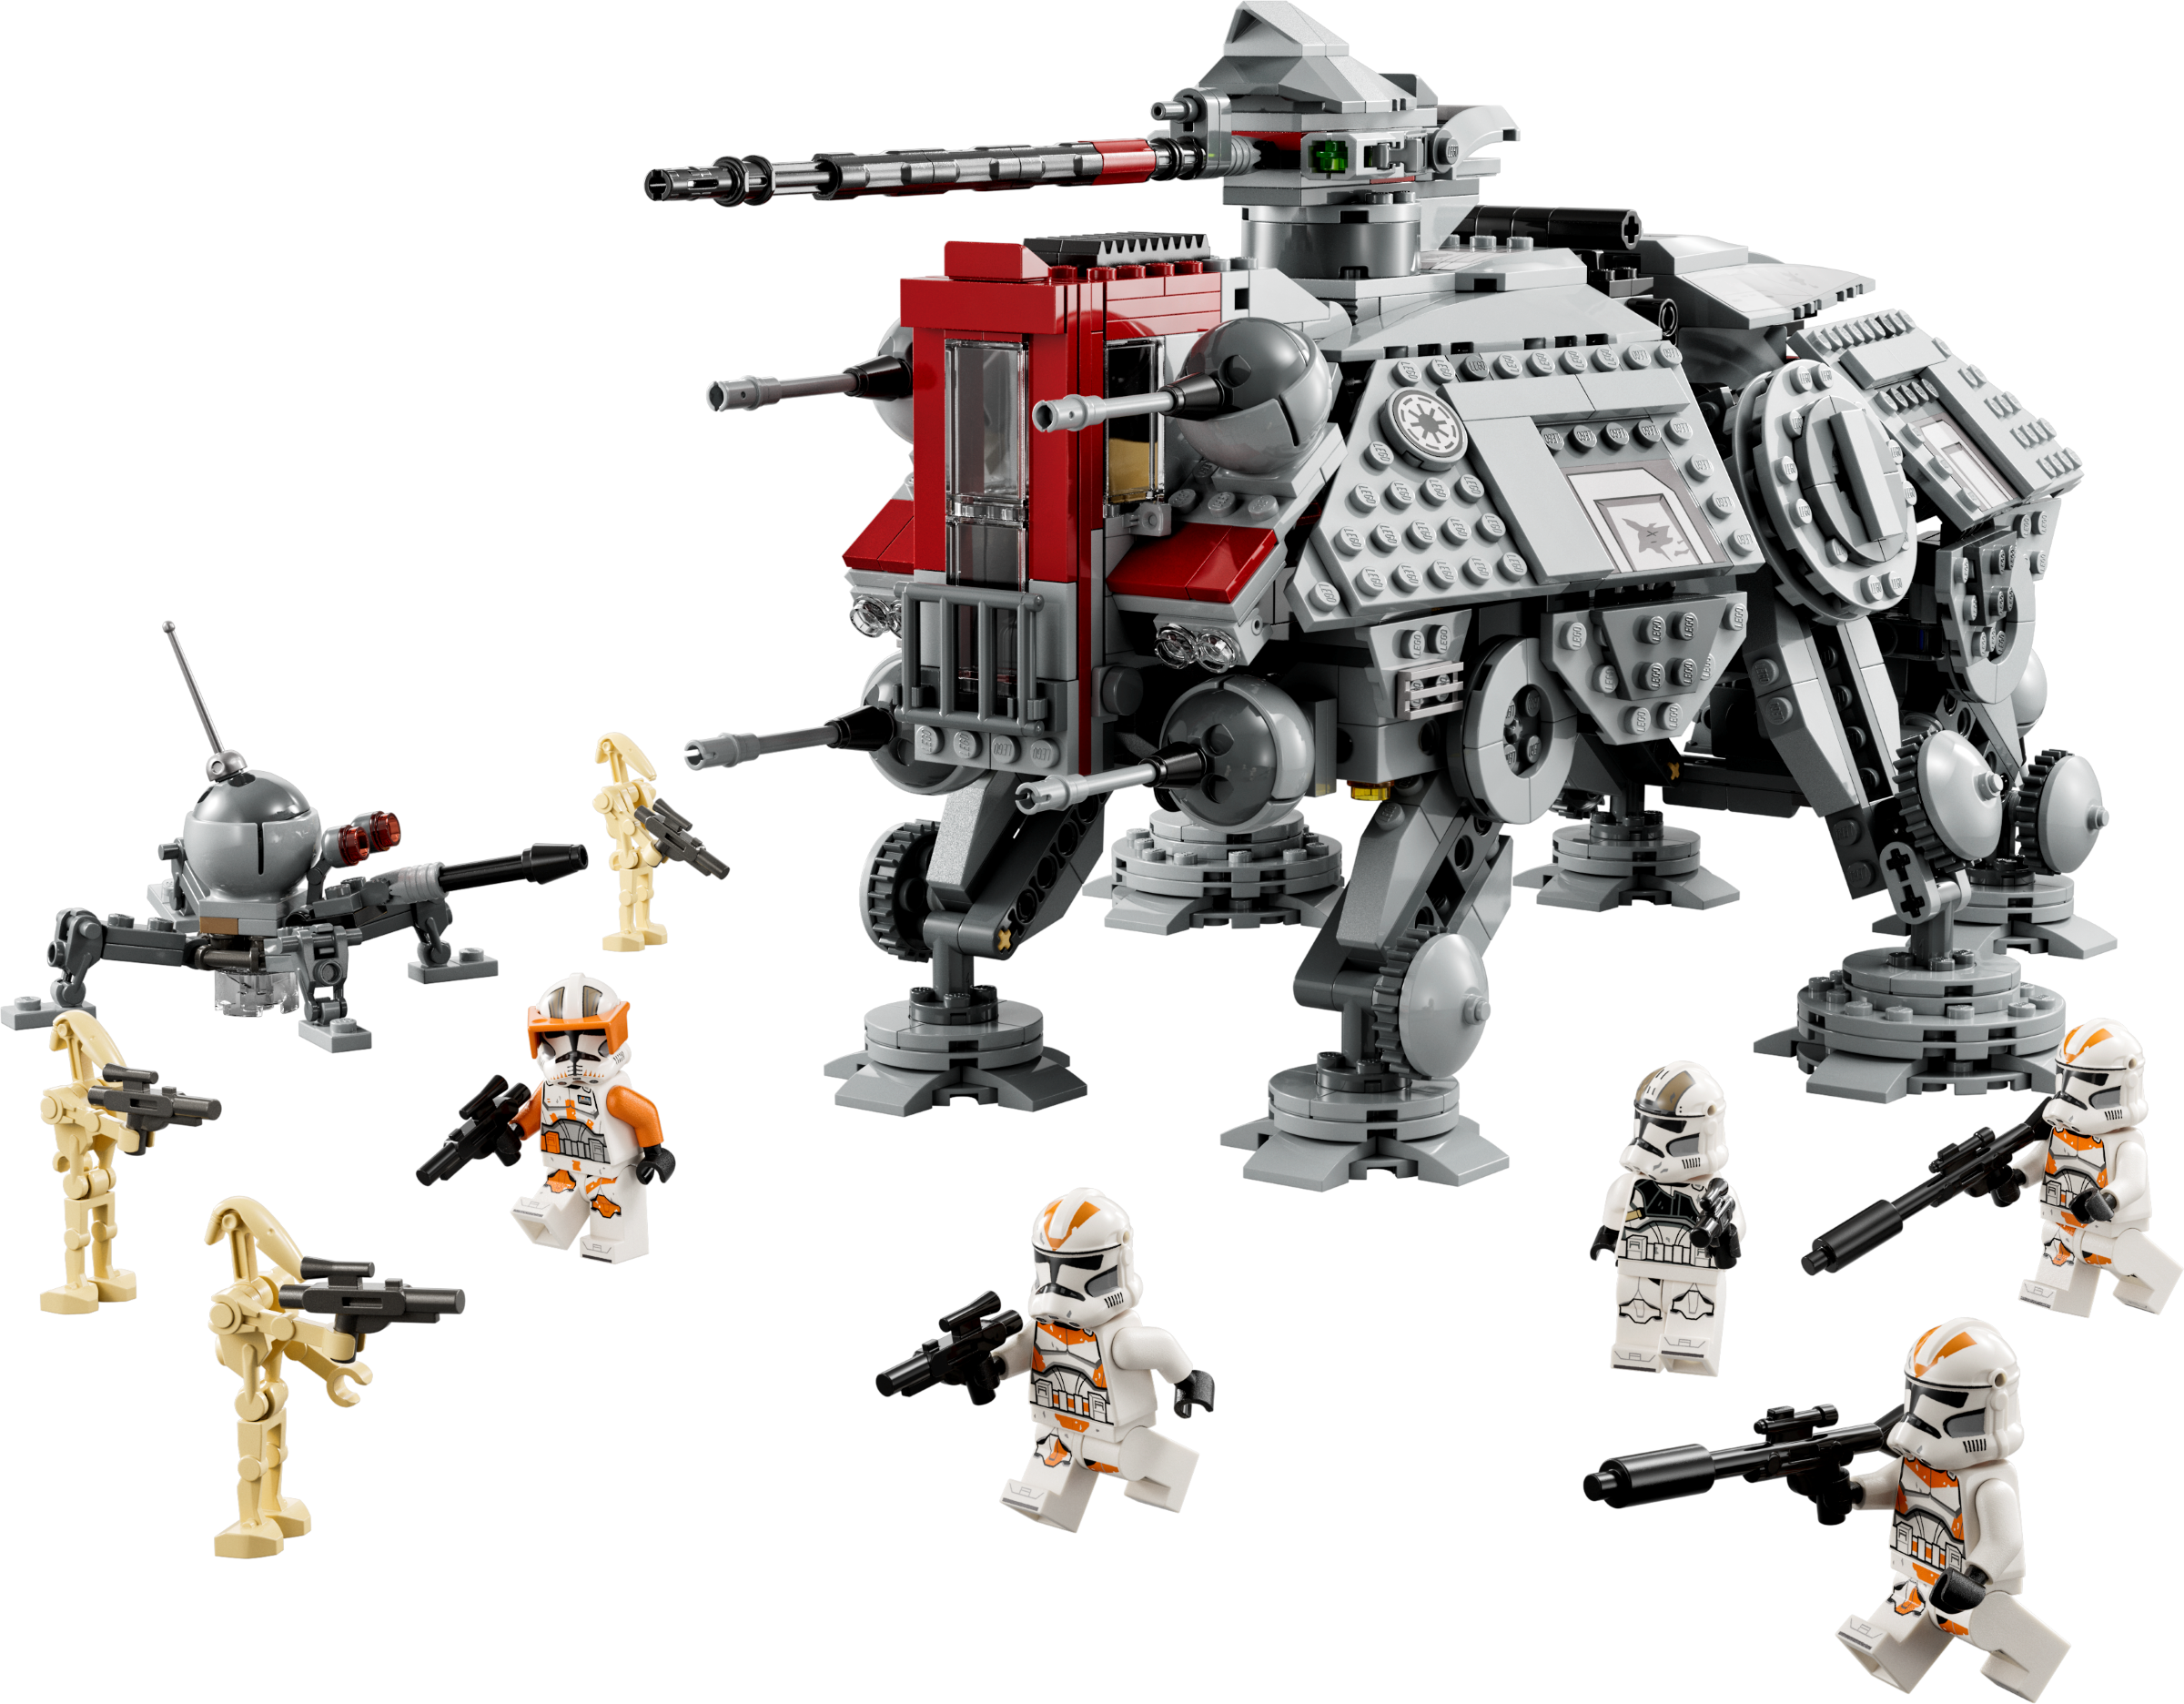 Lego 75337 Star Wars AT-TE Walker Building kit 1082 Pcs